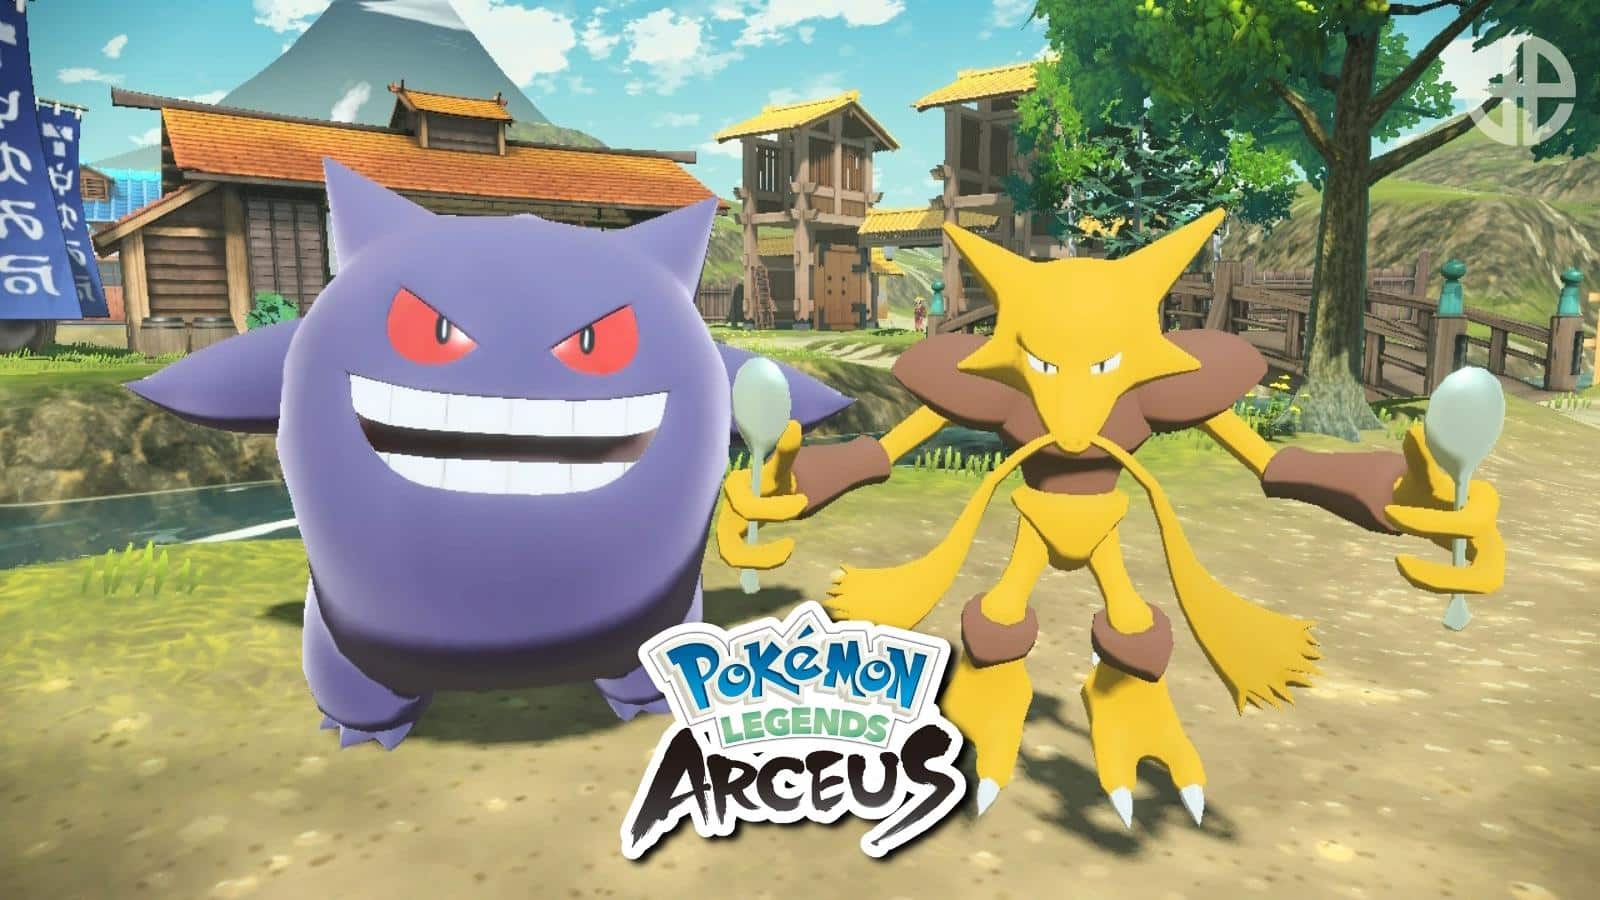 Pokémon Legends Arceus: Every Evolution Method In The Game